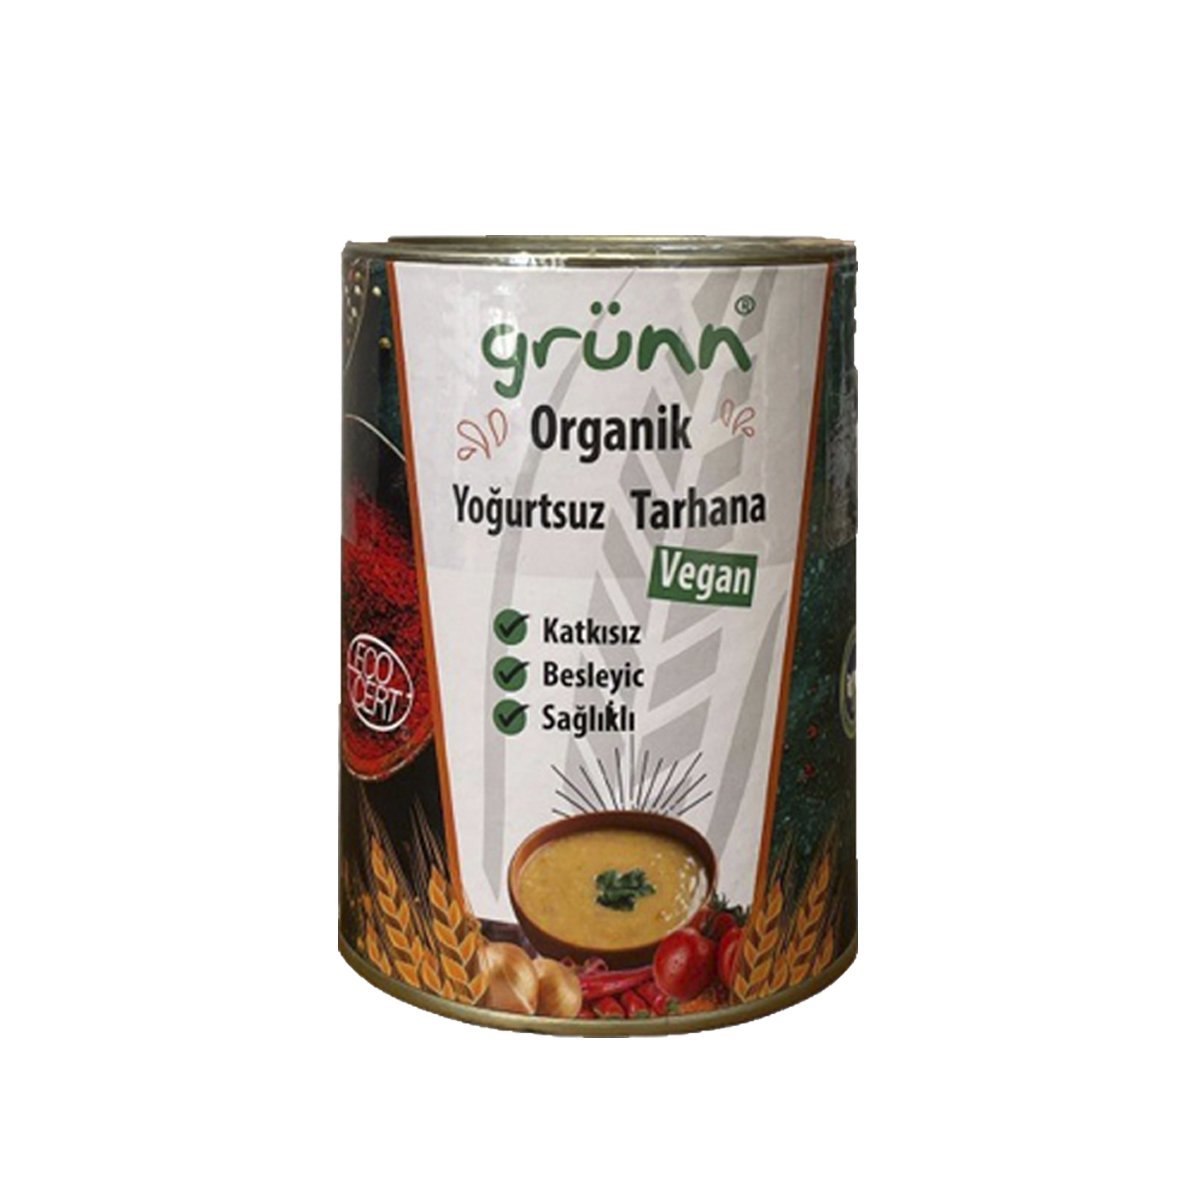 Grünn Organik Vegan Tarhana 400 g